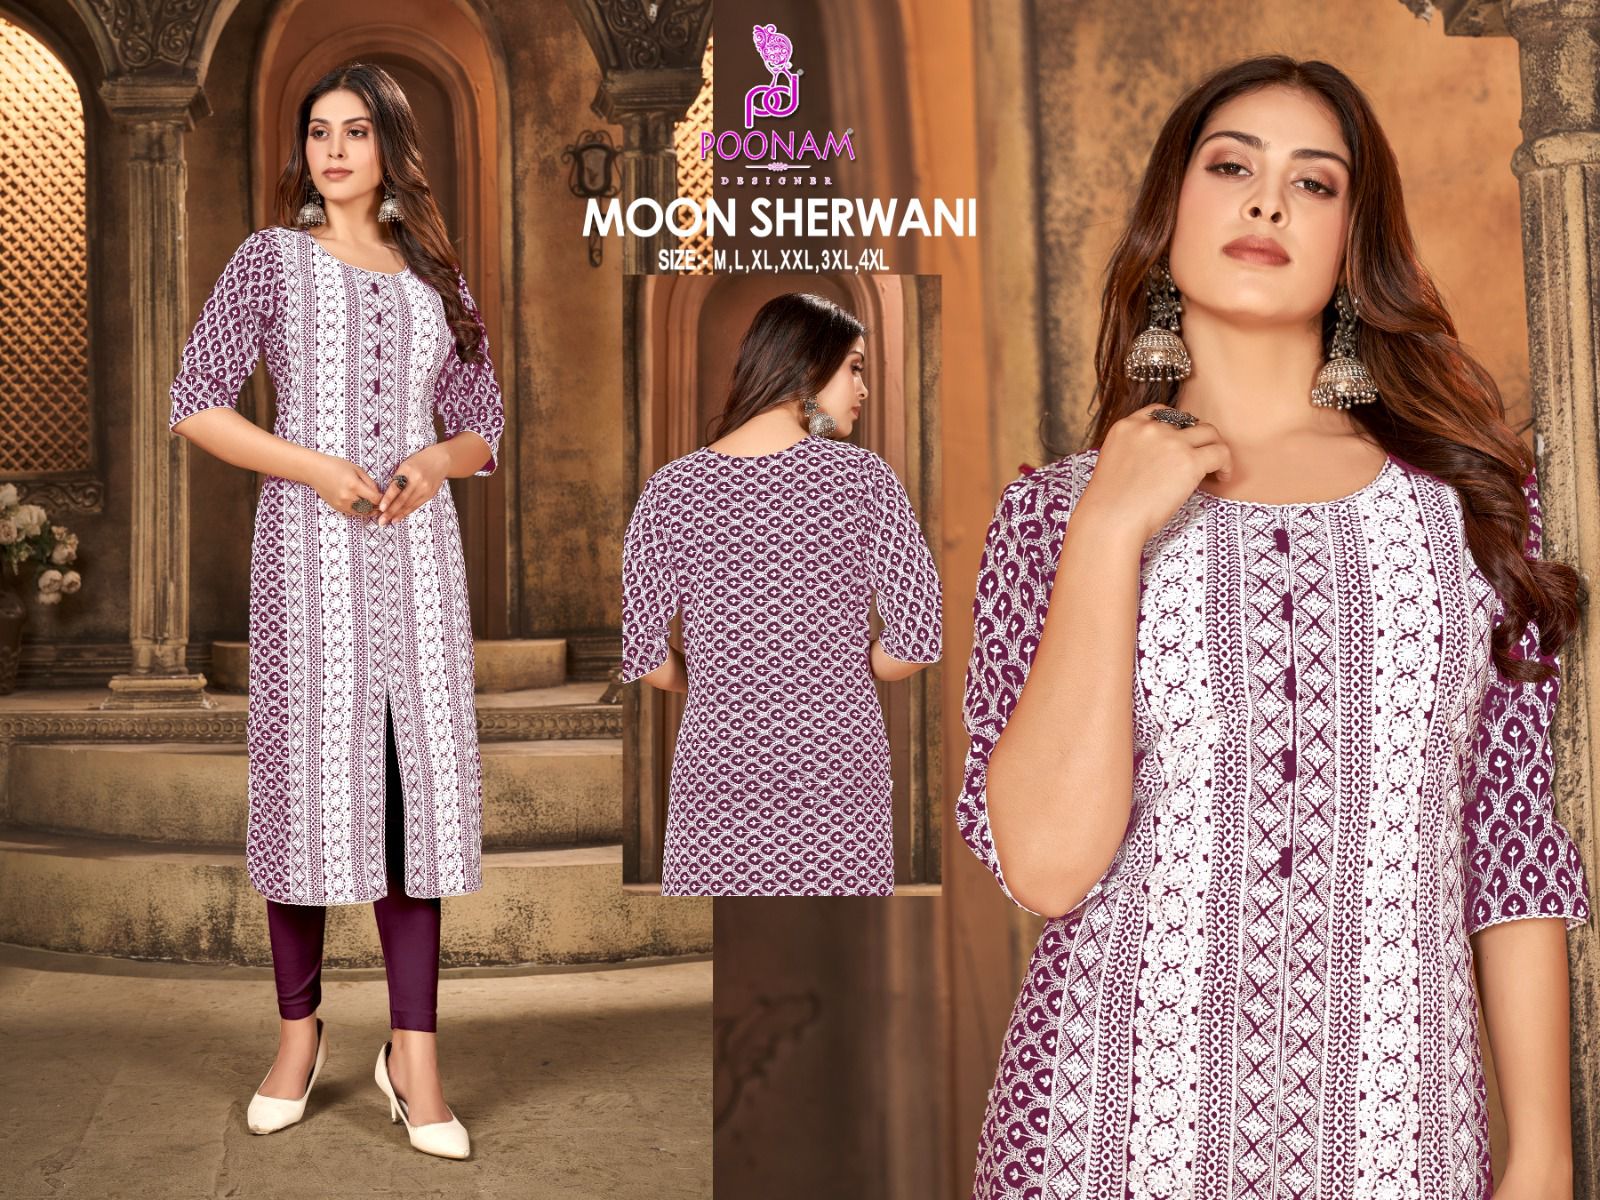 Poonam Moon Sherwani collection 6